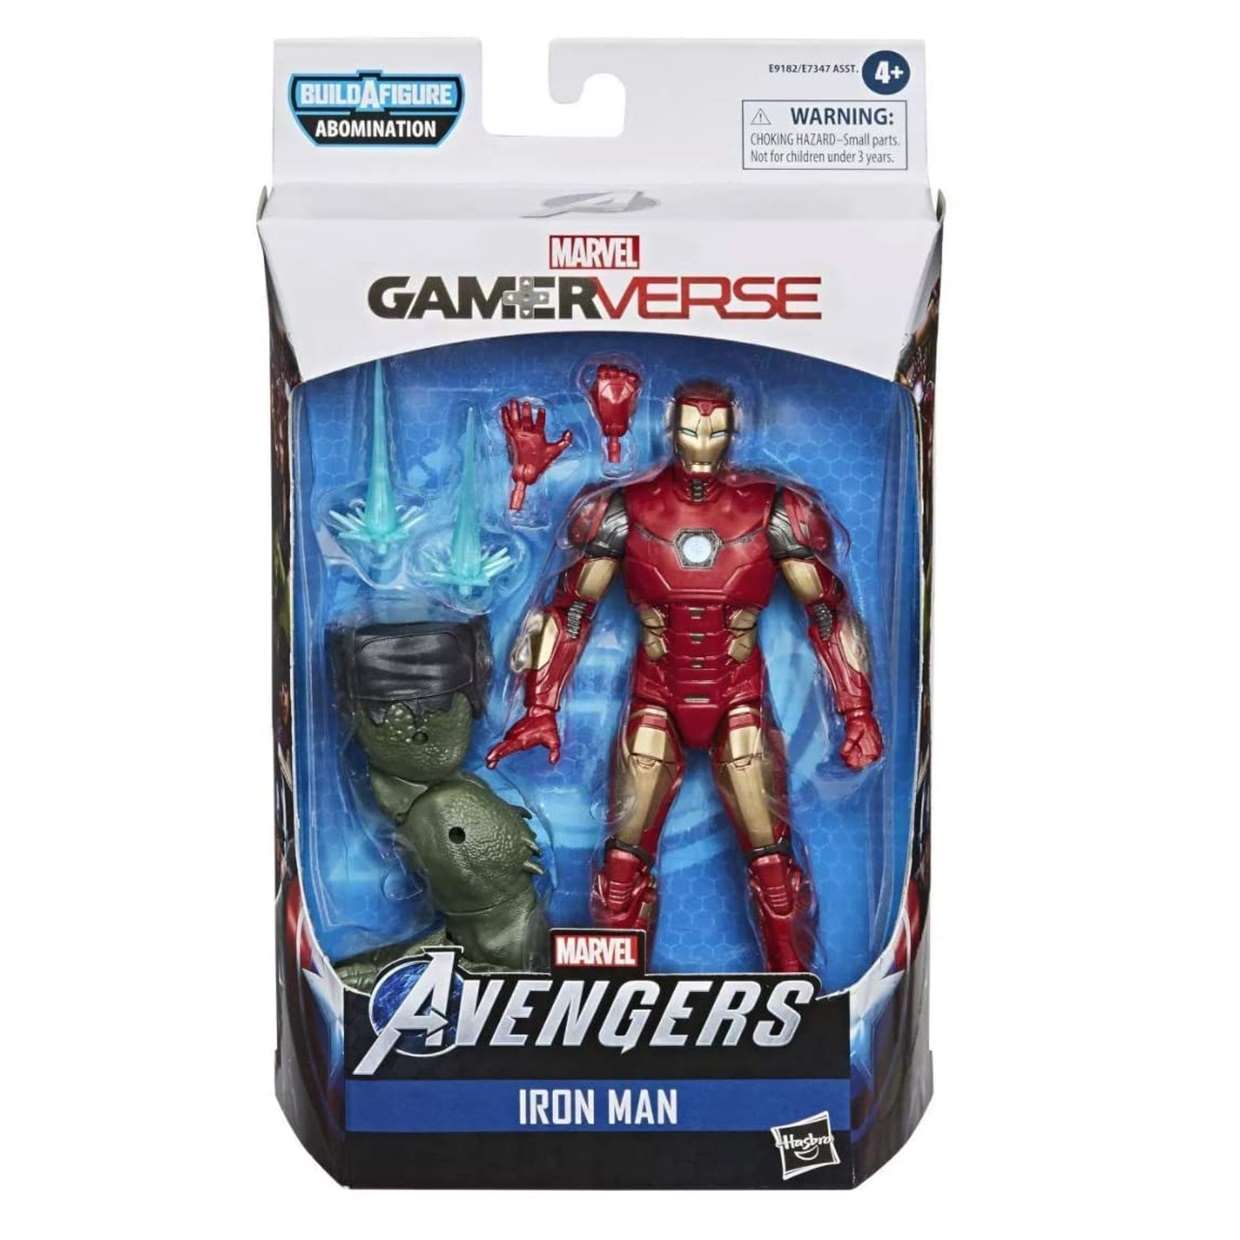 Iron Man Figura Marvel B A F Abomination Avenger Gamerverse 